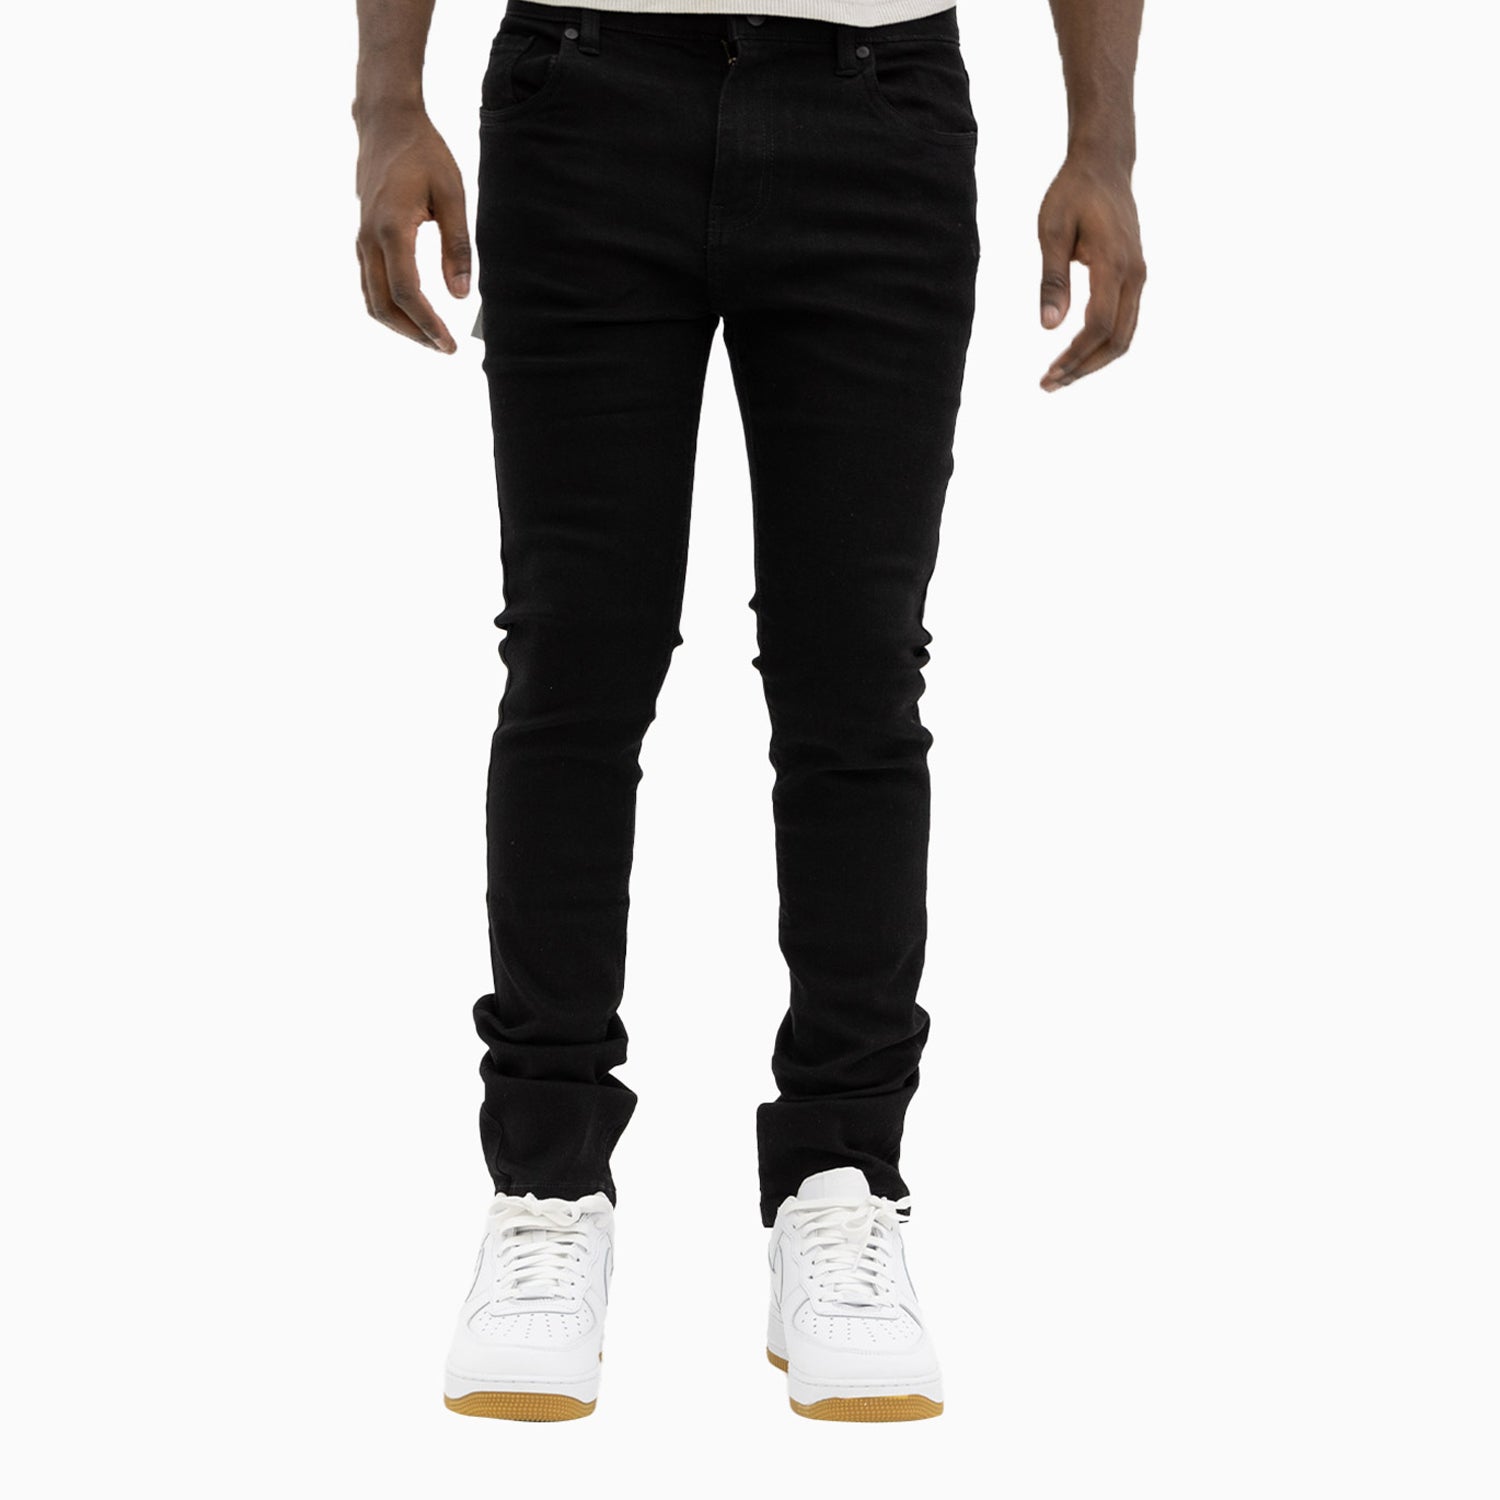 mens-savar-jet-black-slim-denim-jeans-pant-sjb0100-jetblk